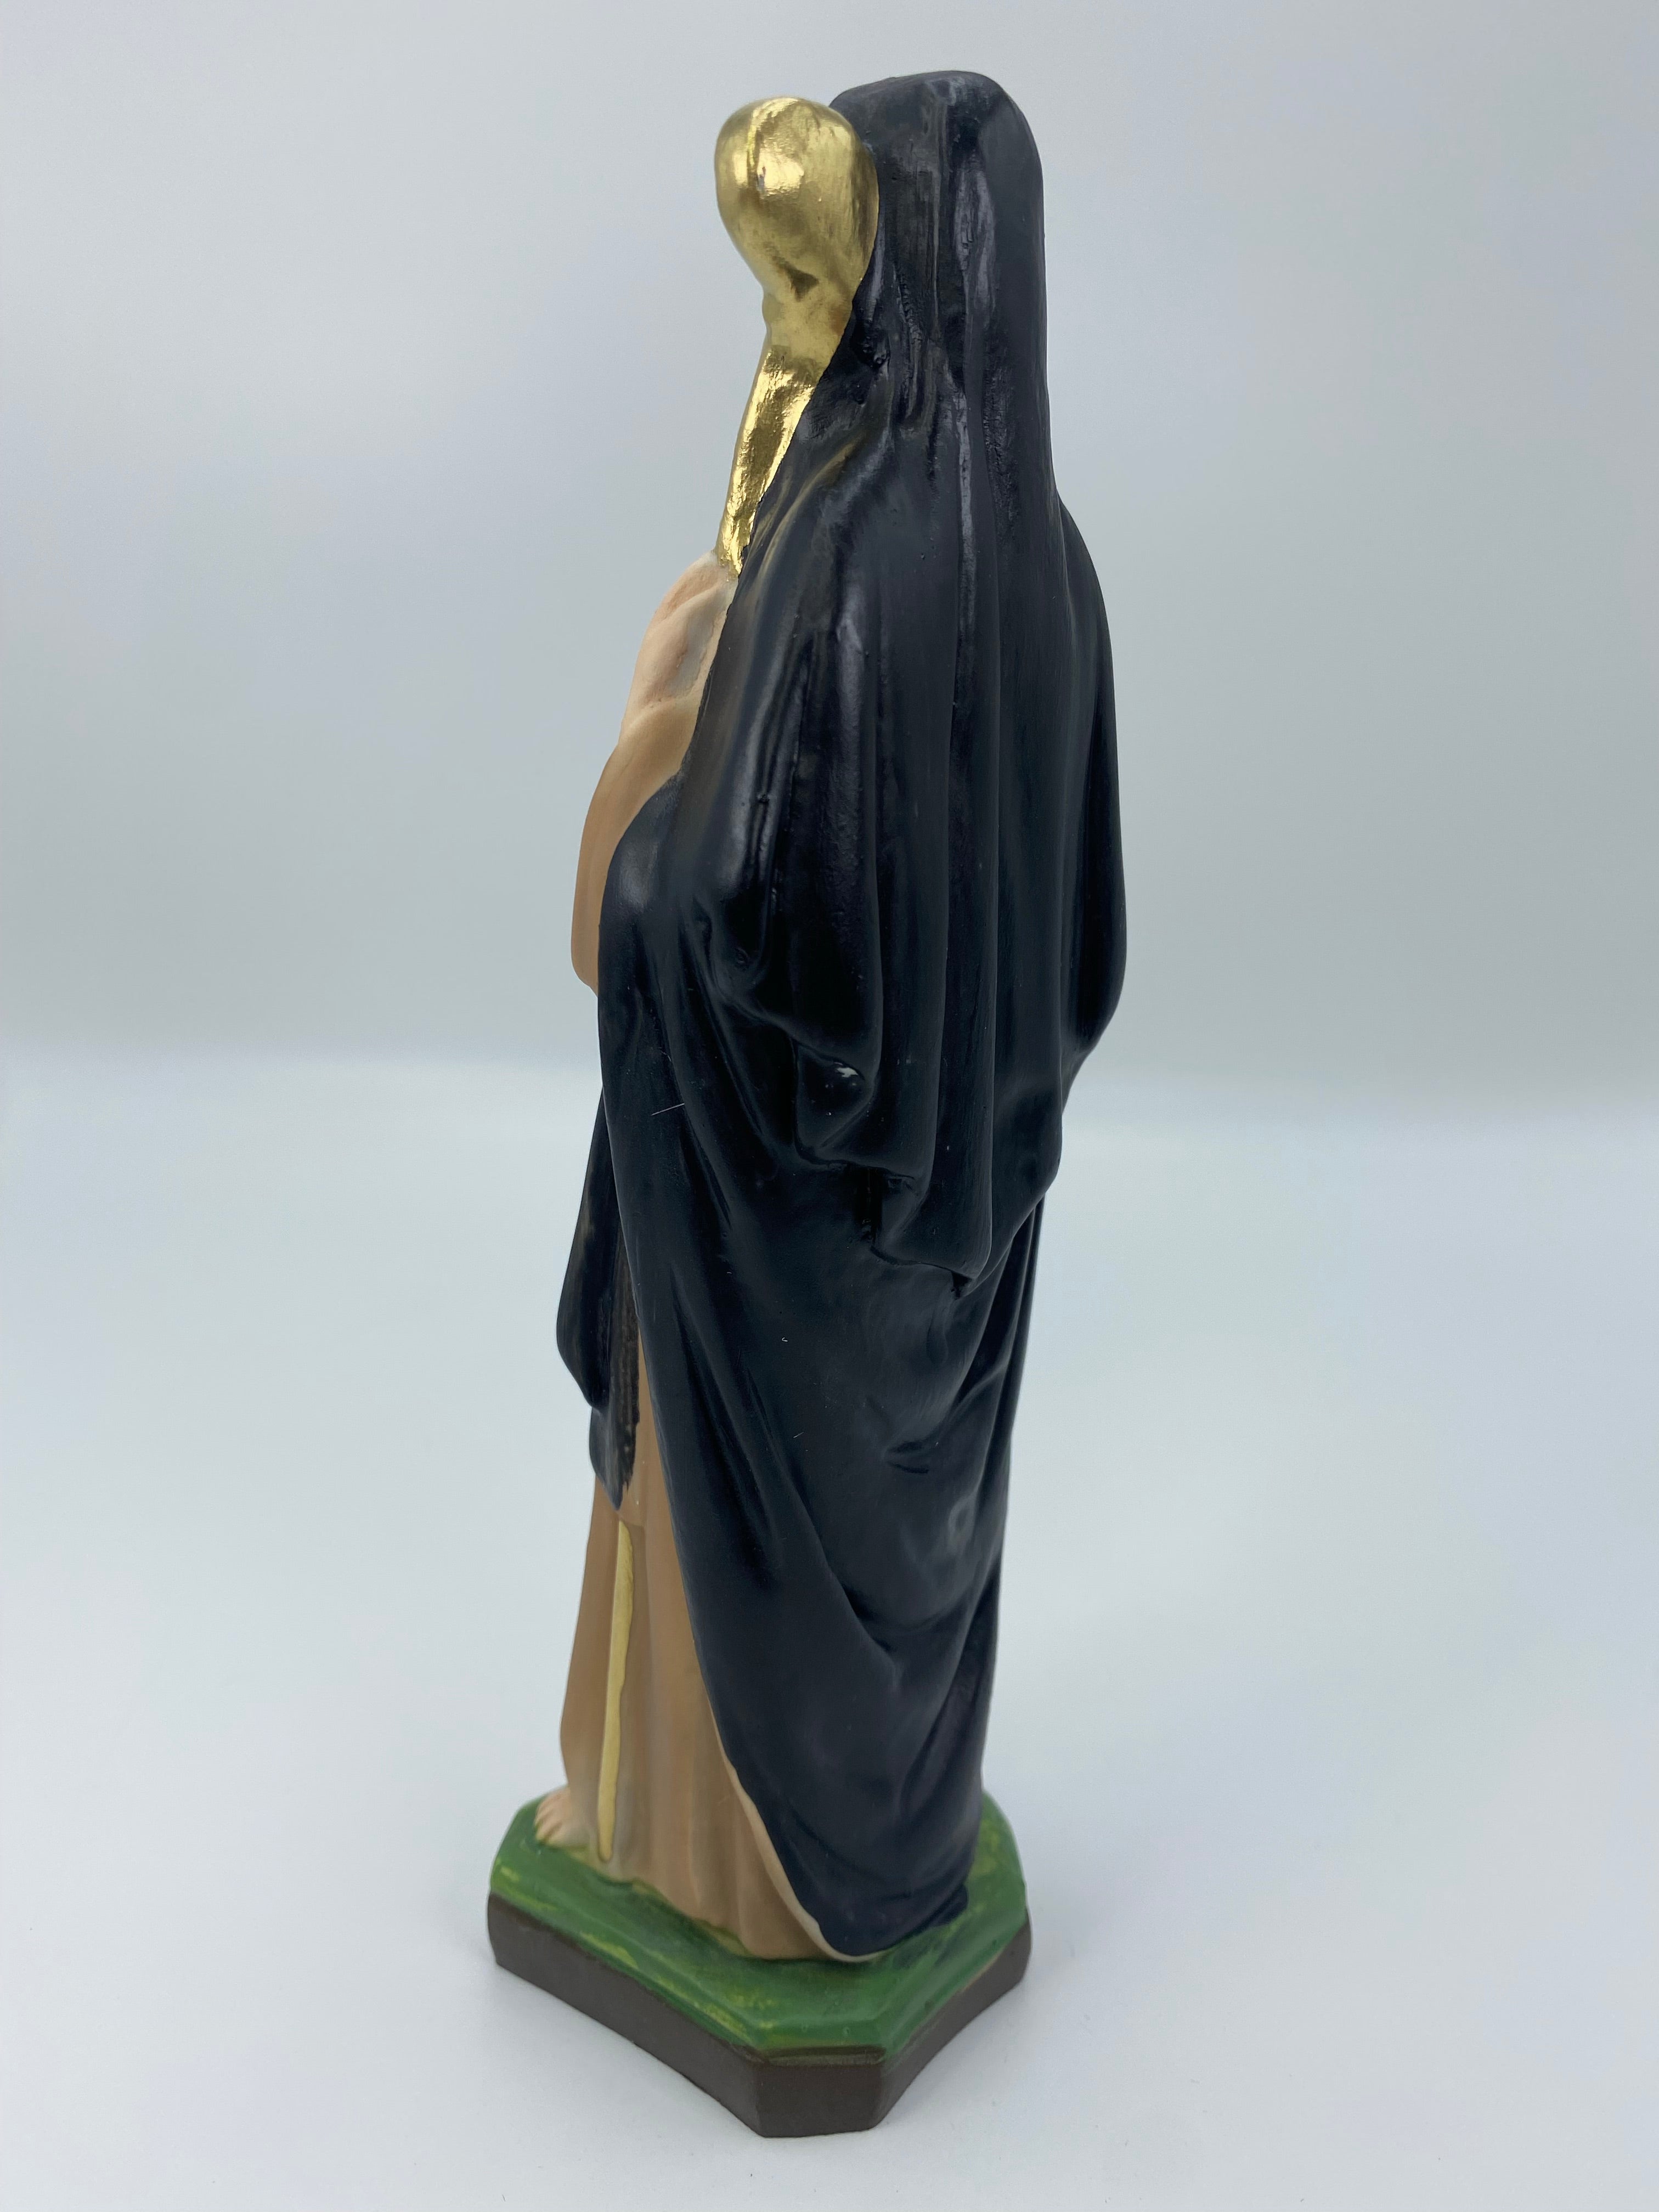 The Faith Gift  Shop Saint Bridget statue - Hand Painted in Italy - Our Tuscany Collection -Estatua de Santa Brigida